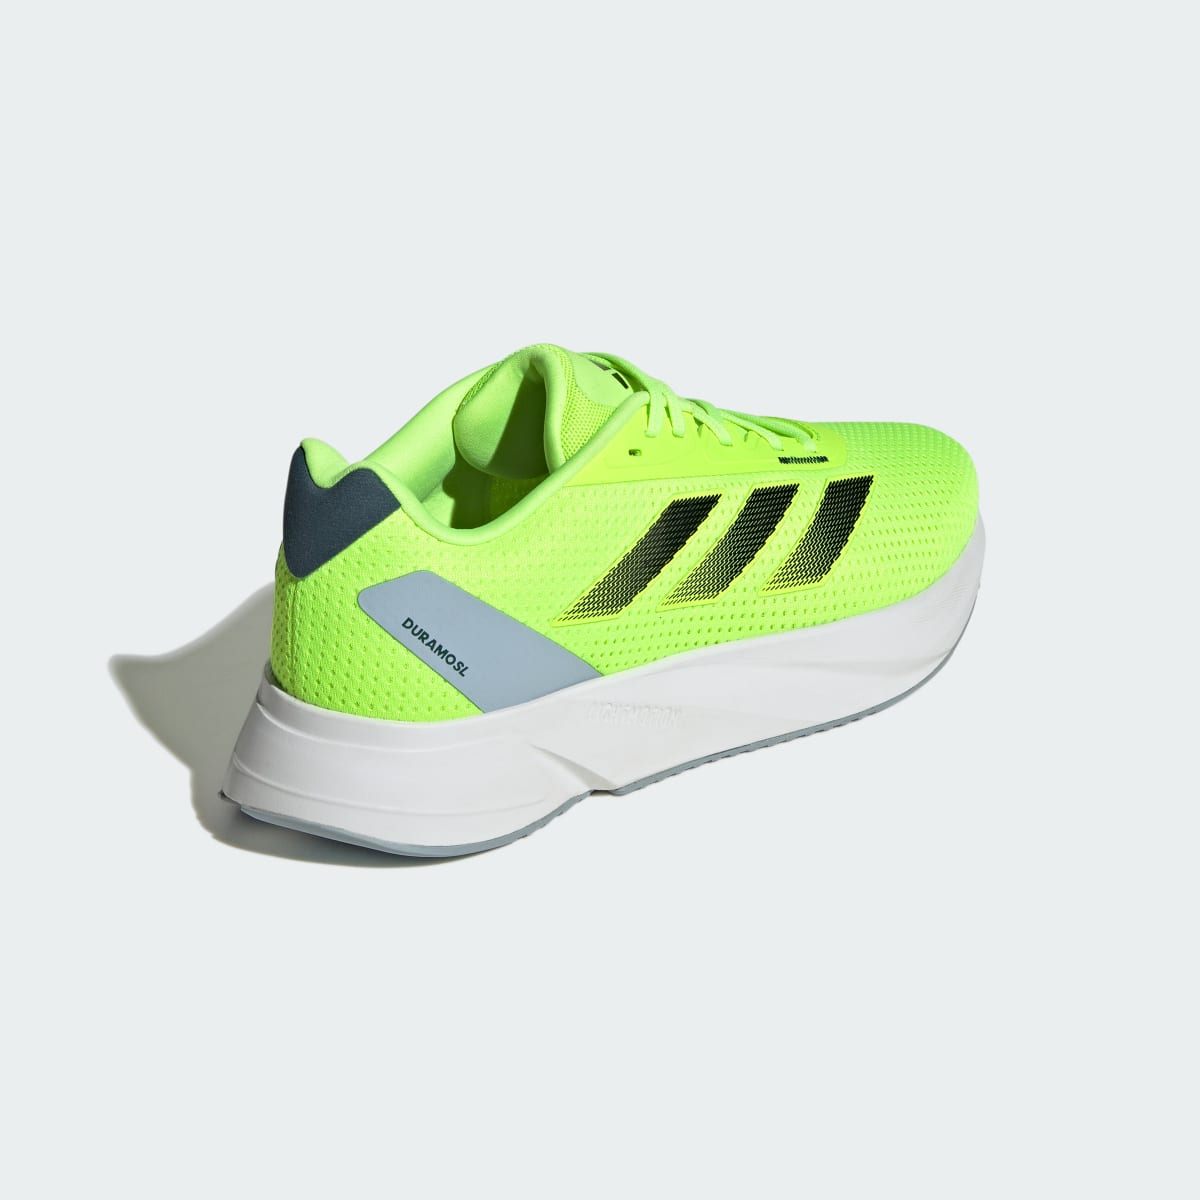 Adidas Duramo SL Ayakkabı. 6